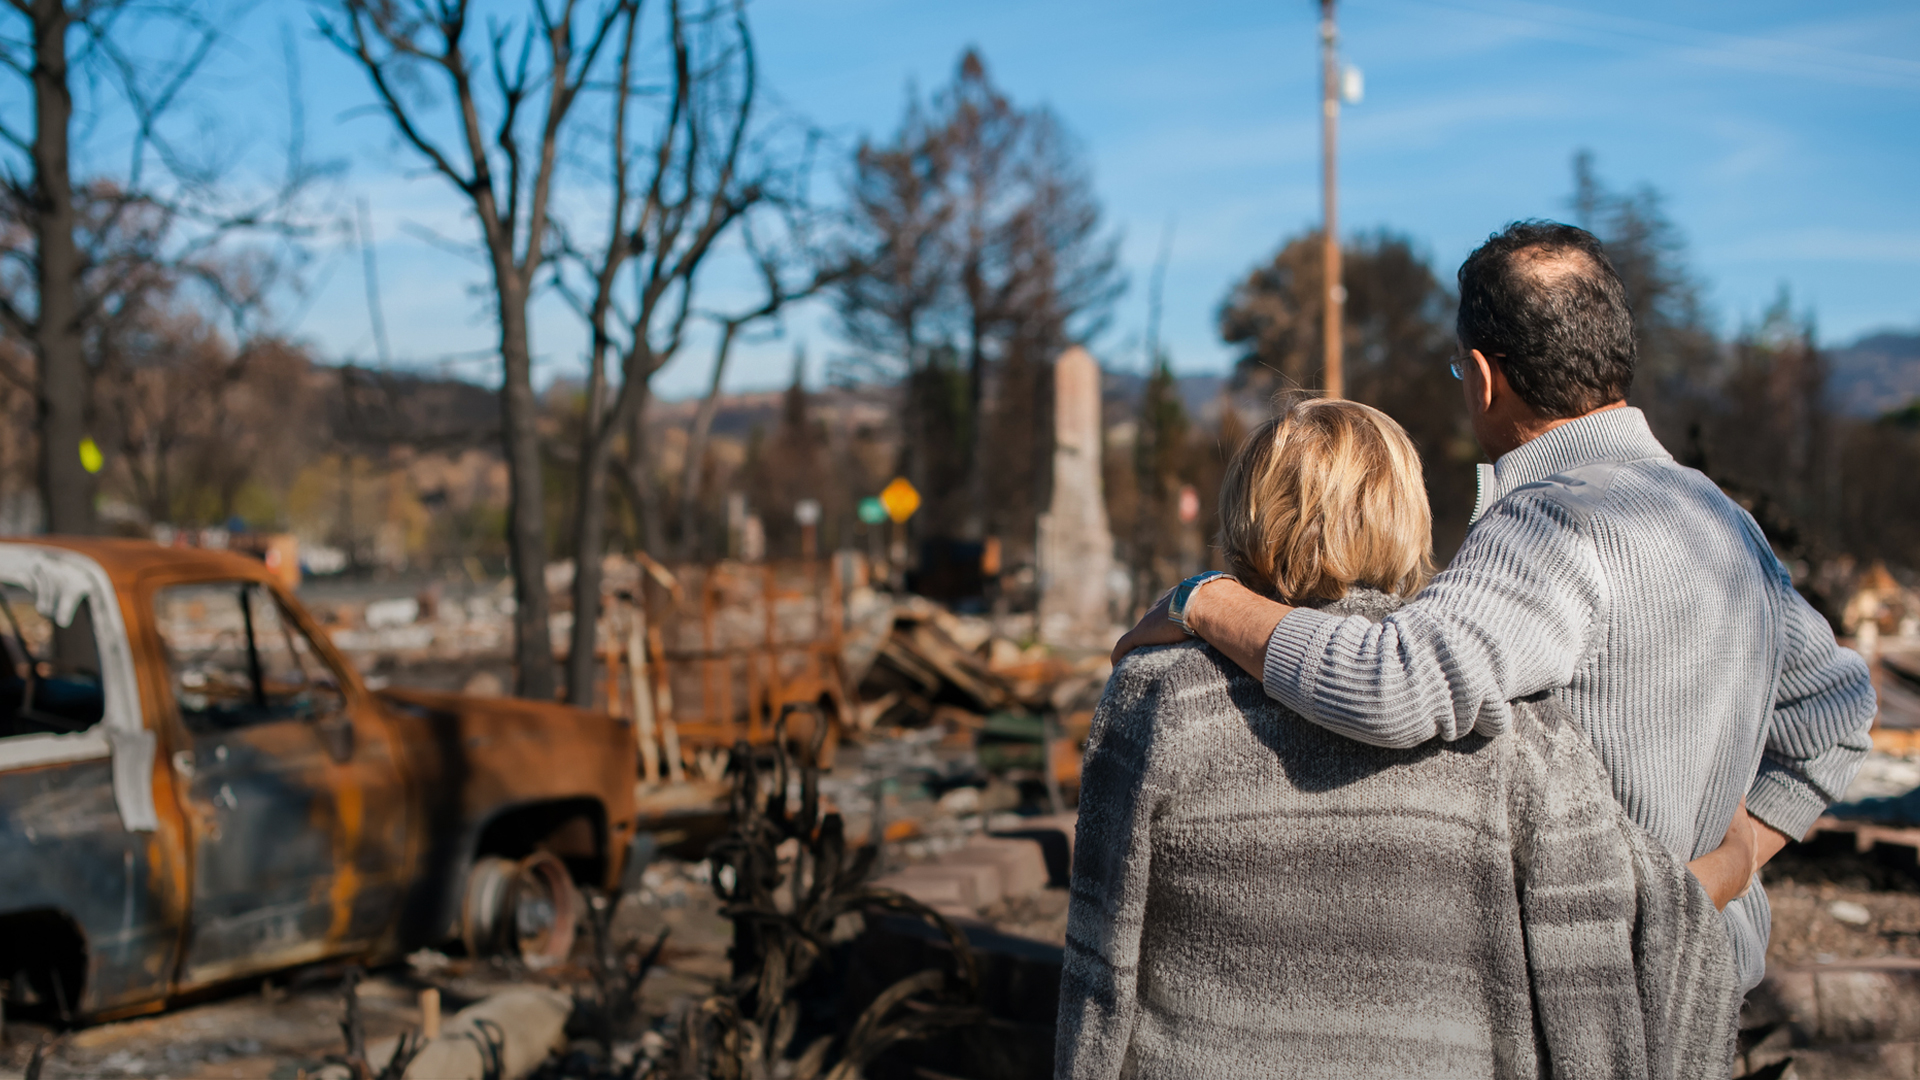 P&C’s Global Wildfire Crisis: 3 Keys to Rethinking Risk & Response